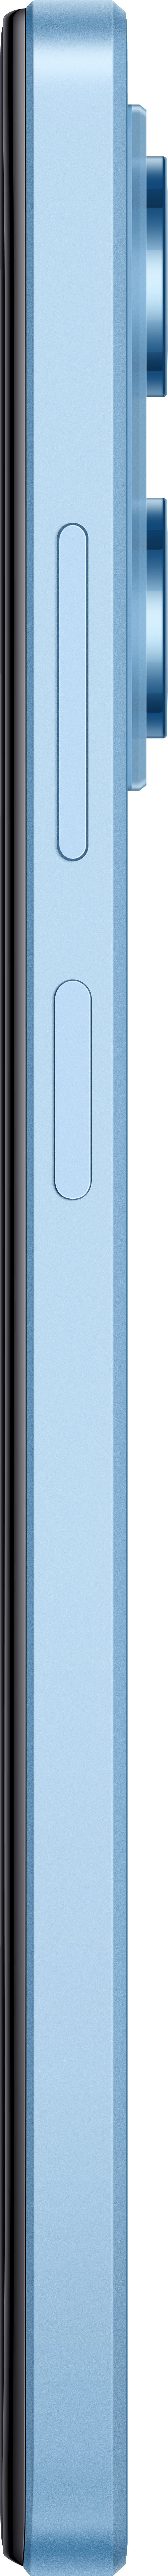 XIAOMI Redmi Note 12 Pro Sky Blue SIM GB Dual 5G 128